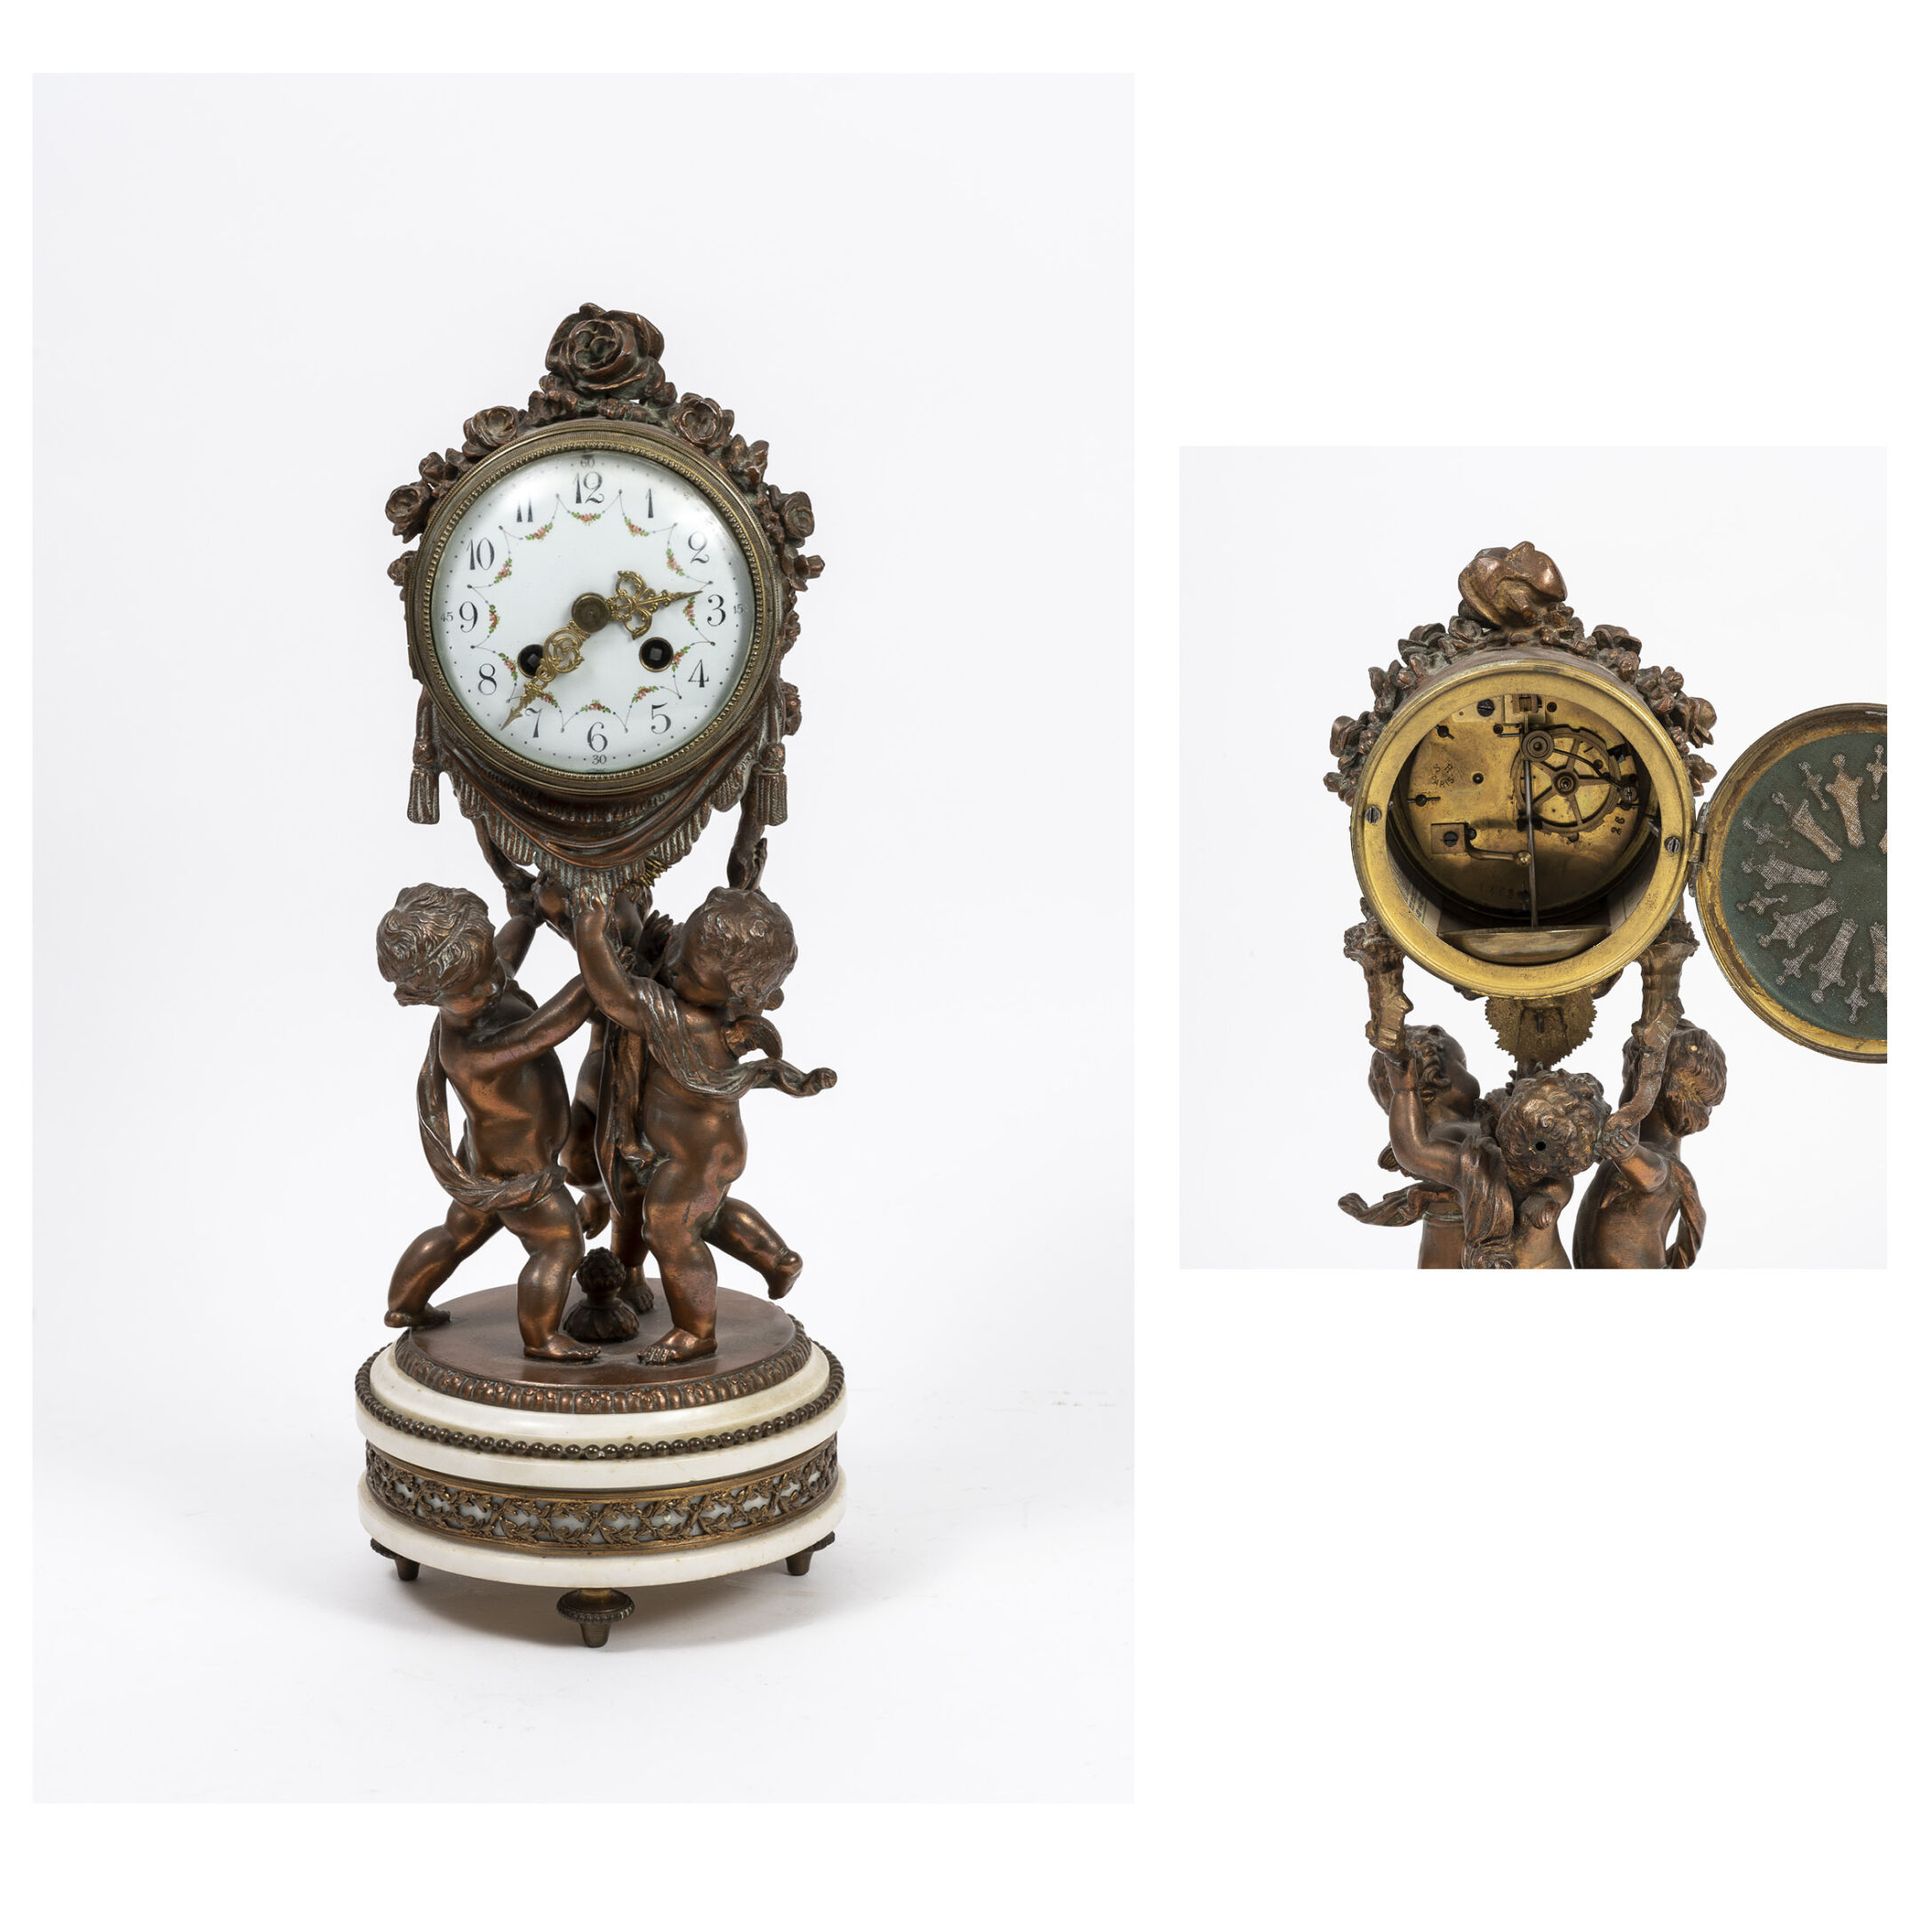 FRANCE, début du XXème siècle 一个带有铜锈的青铜钟，由三个孩子支撑着机芯形成。

白色珐琅表盘上有黑色的阿拉伯数字小时和刻钟，圆点&hellip;